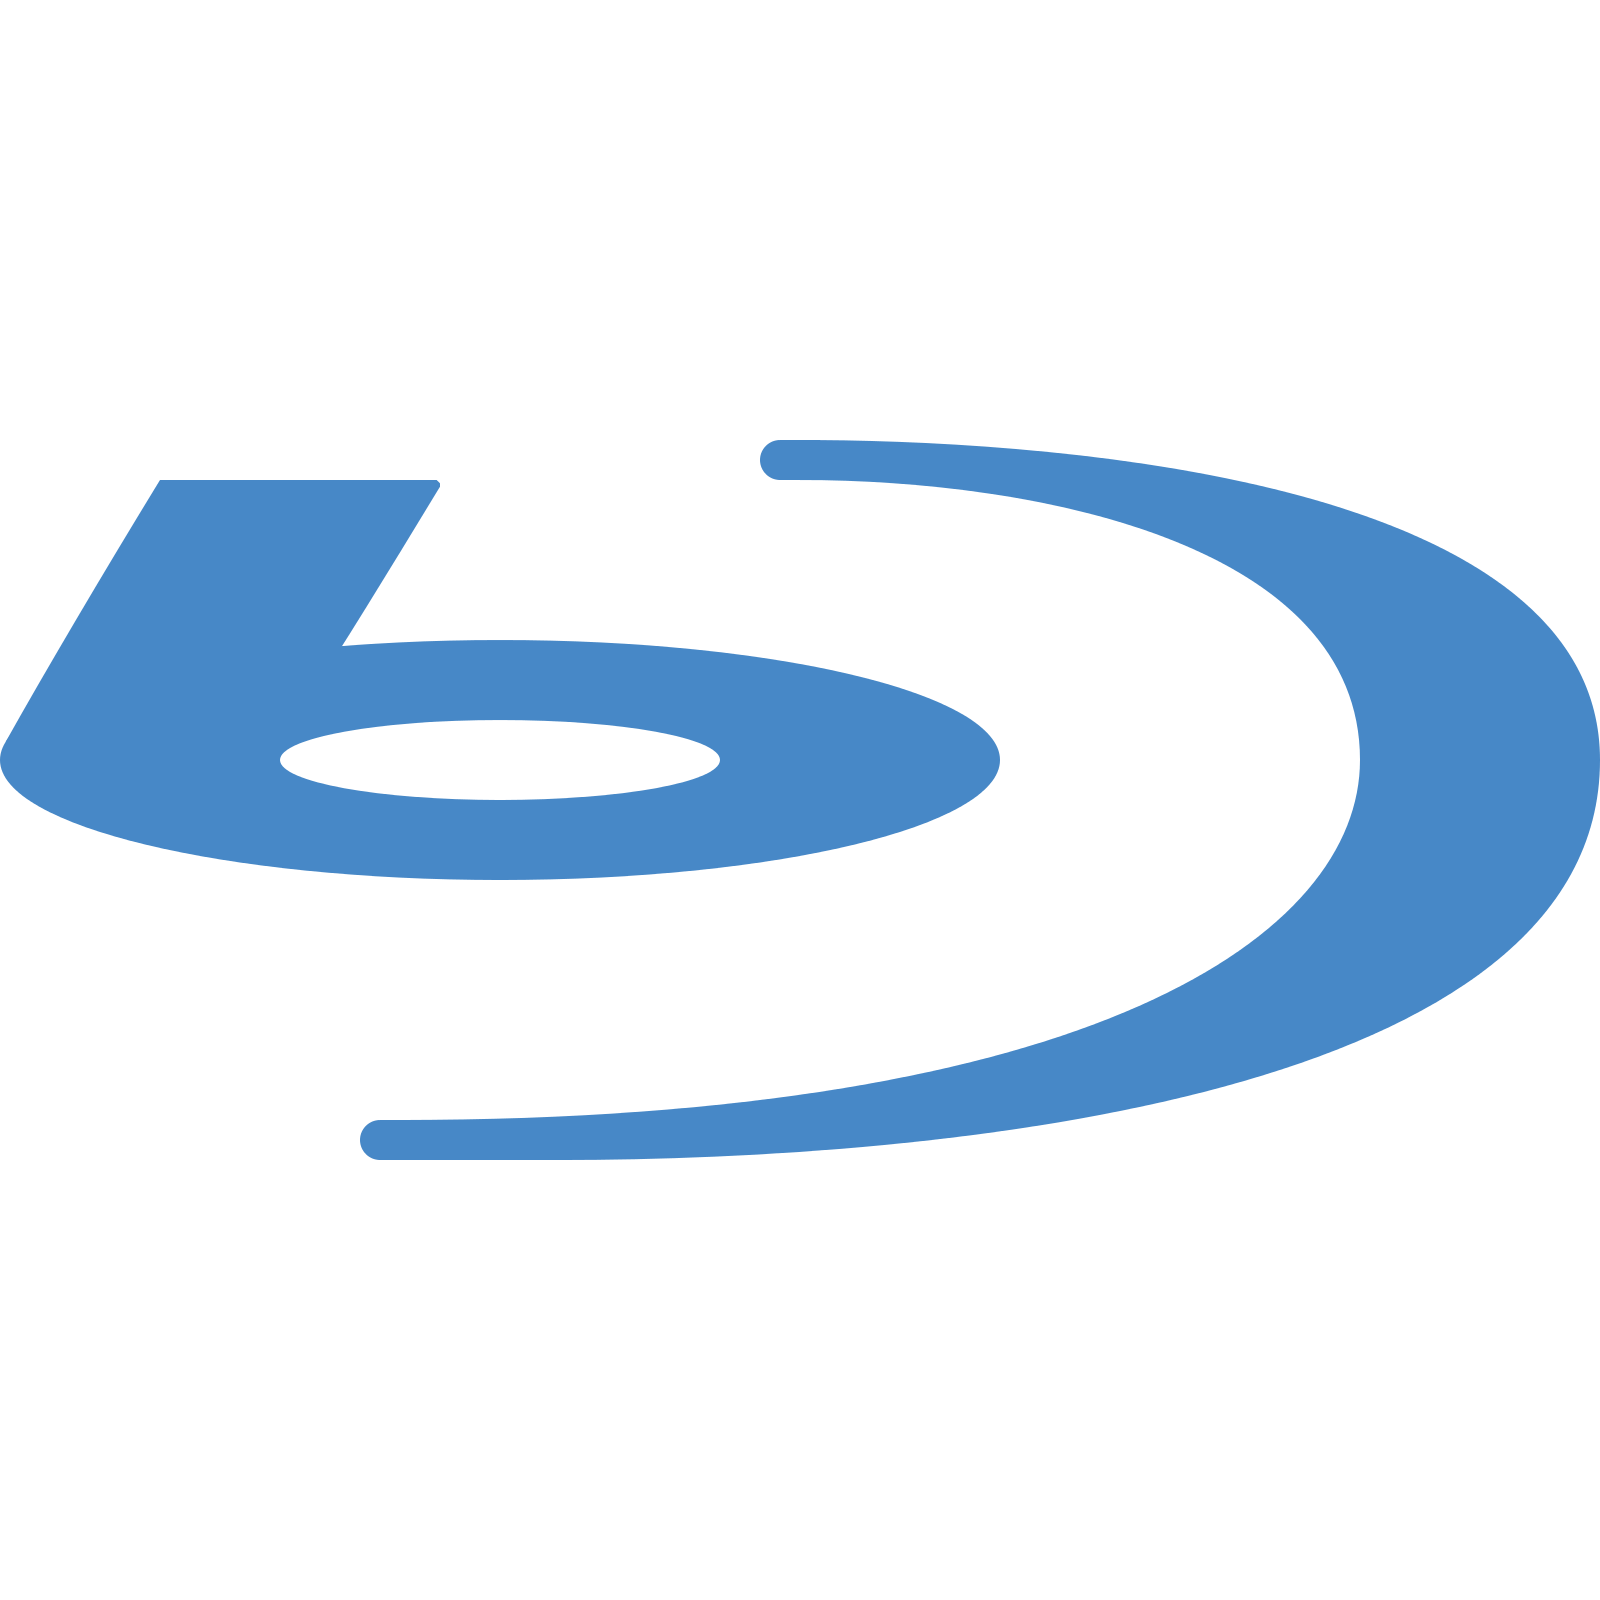 Blu Ray Logo